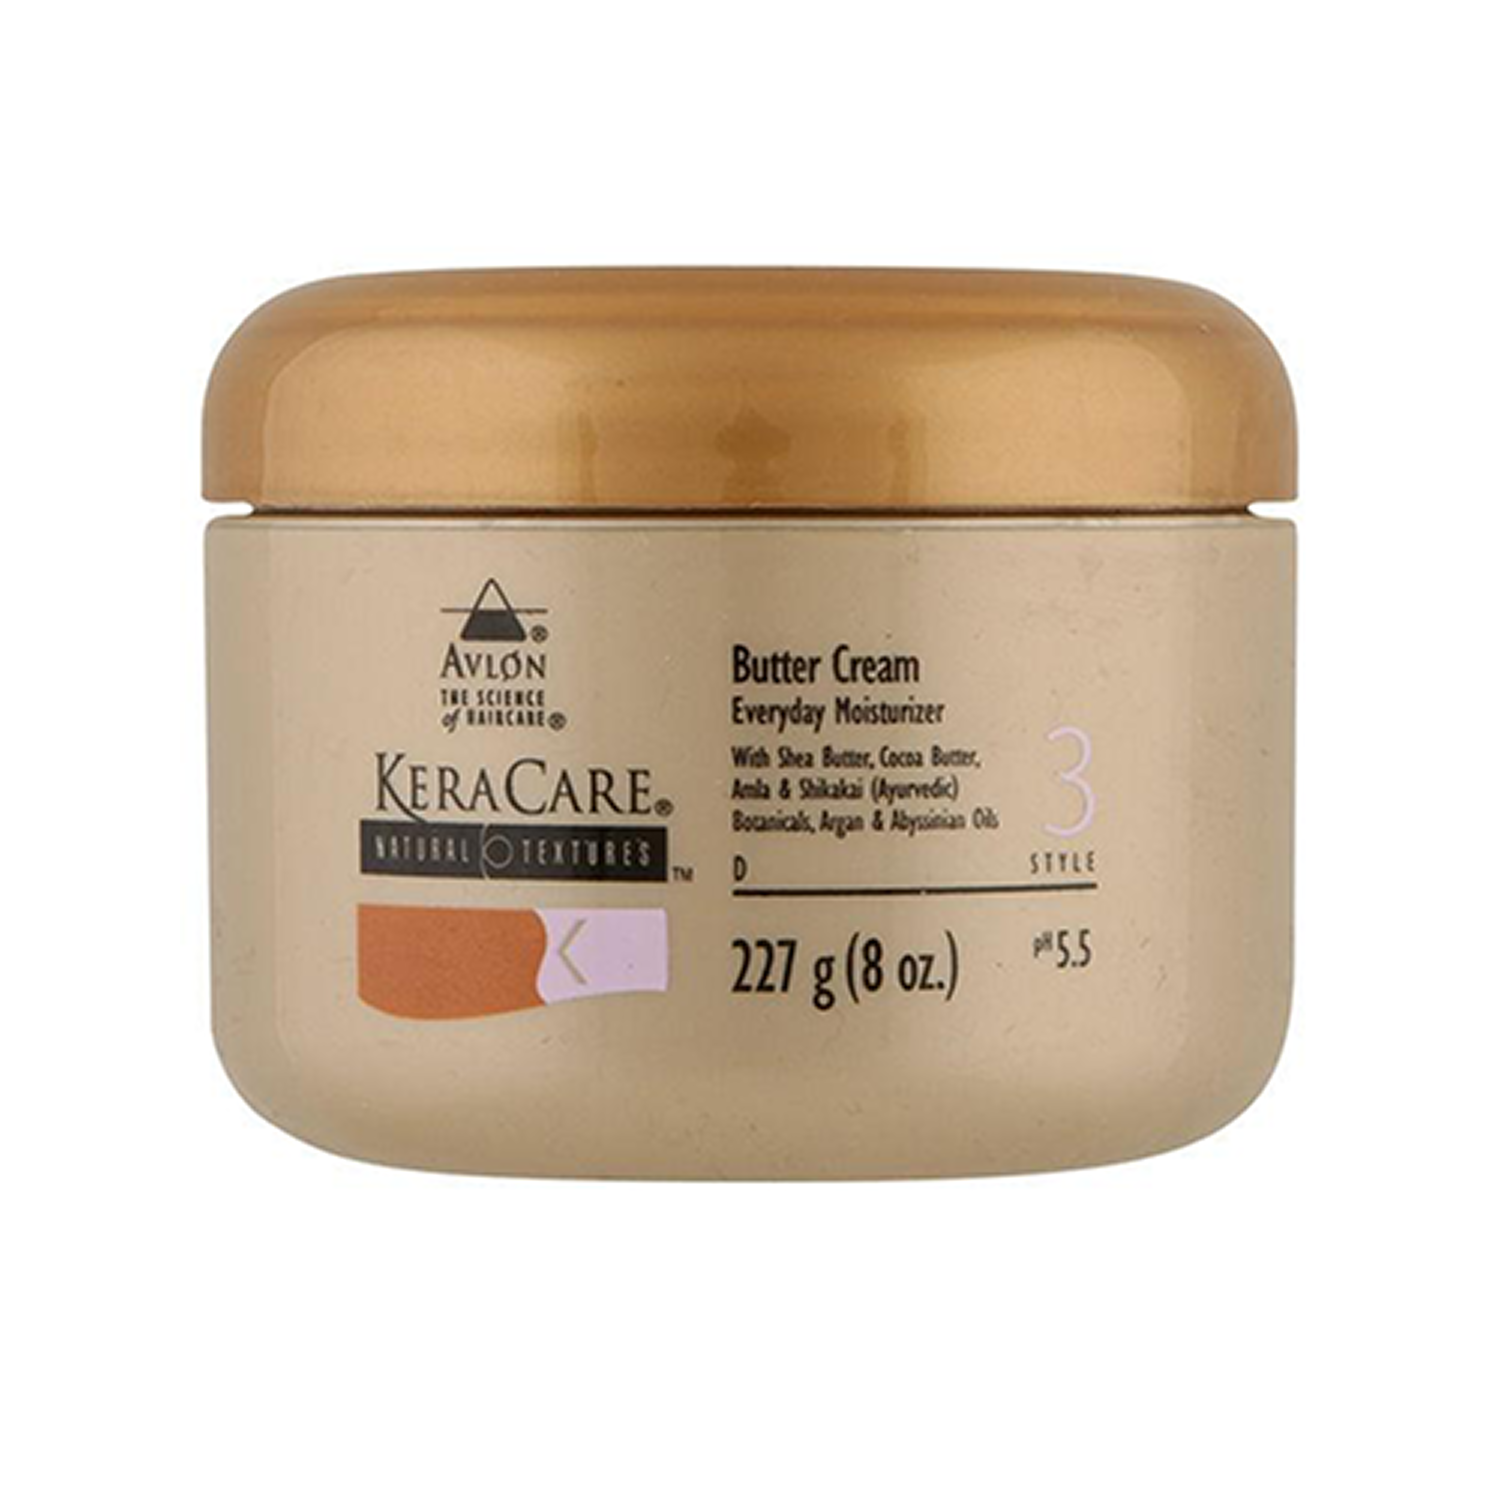 Keracare Natural Textures Butter Cream (227g) - aqnline